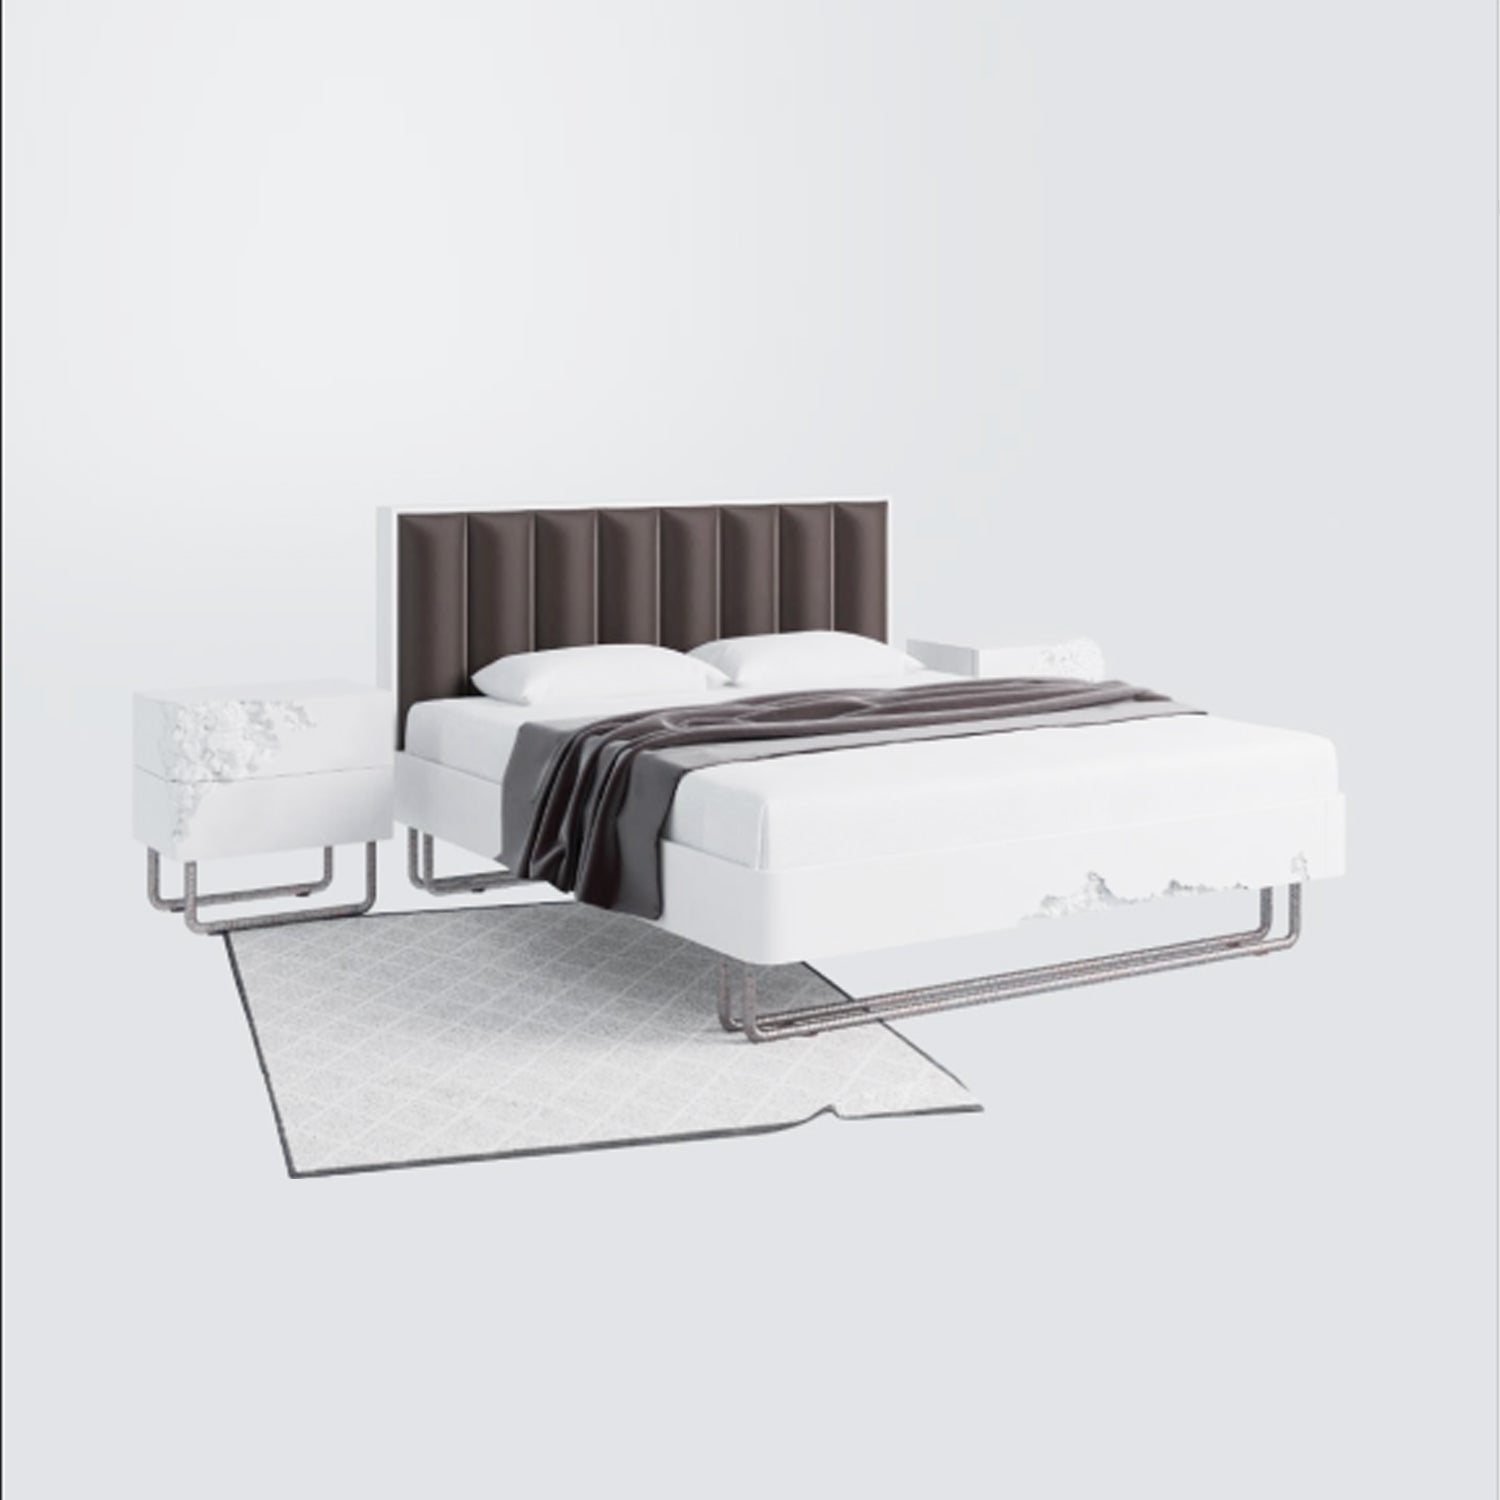 Double Bed BREAKFREE - UKRAINIAN PRODUCT DESIGN